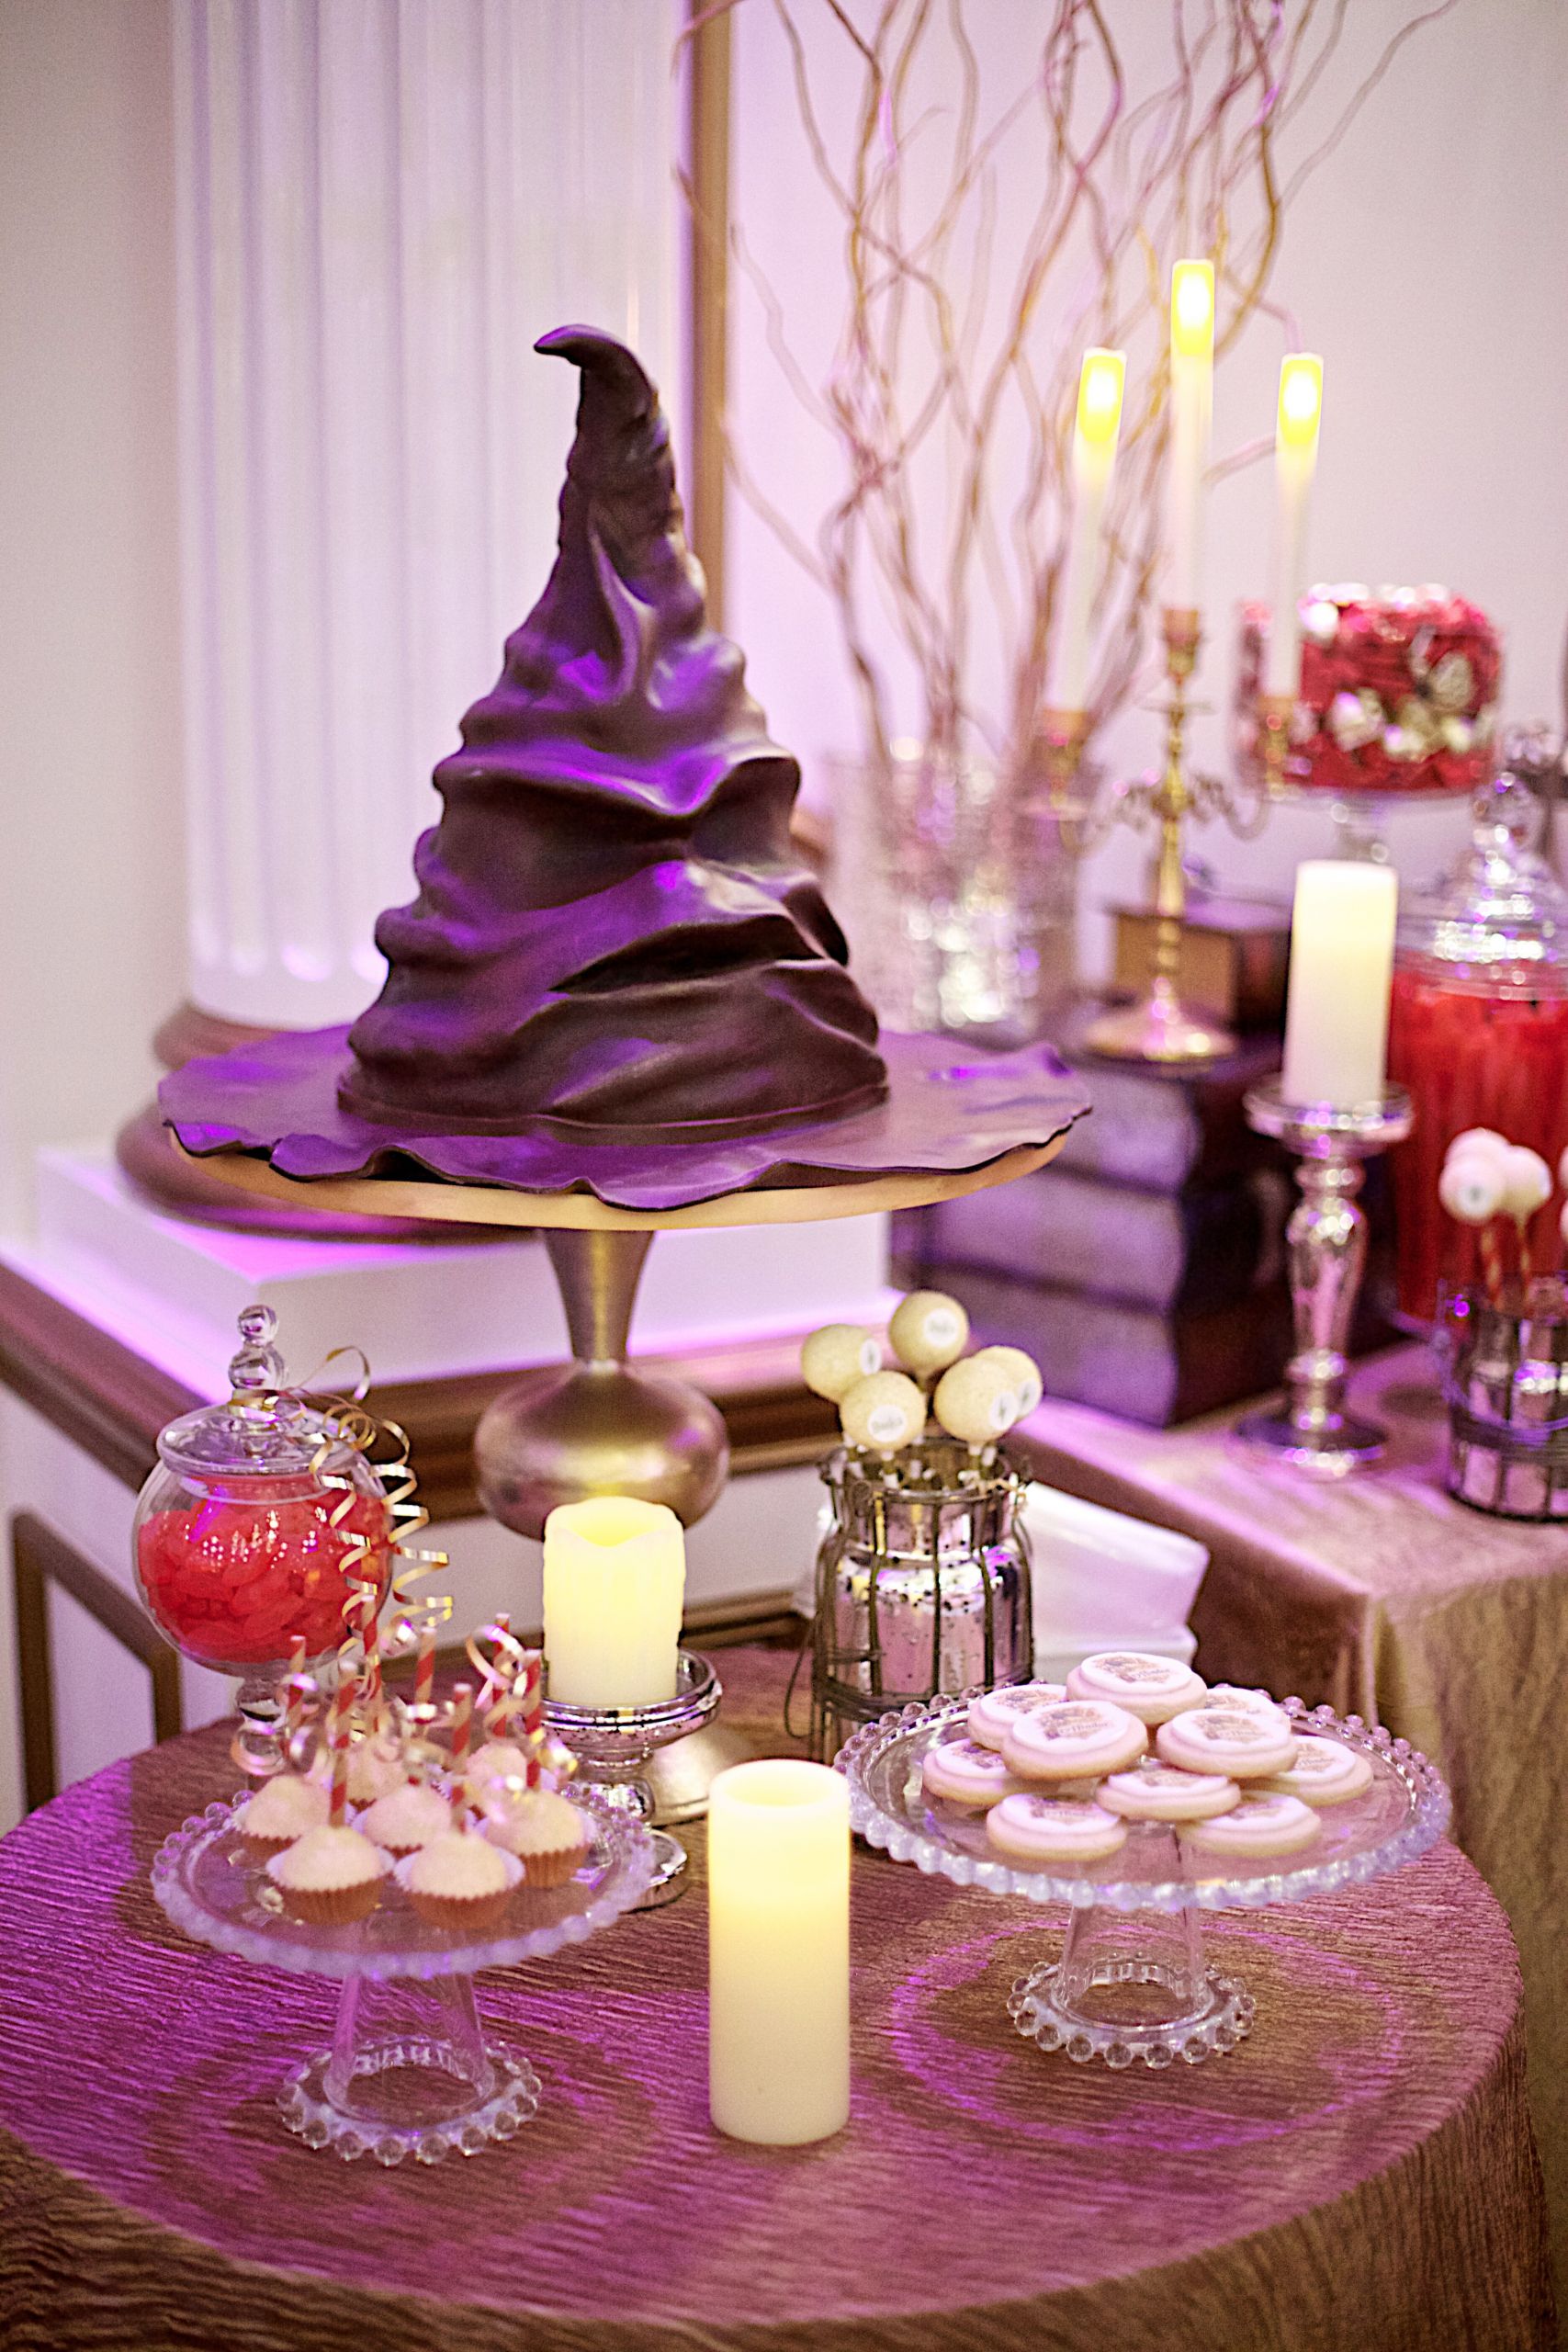 Harry Potter Wedding Cake
 Harry Potter’s Sorting Hat Groom’s Cake